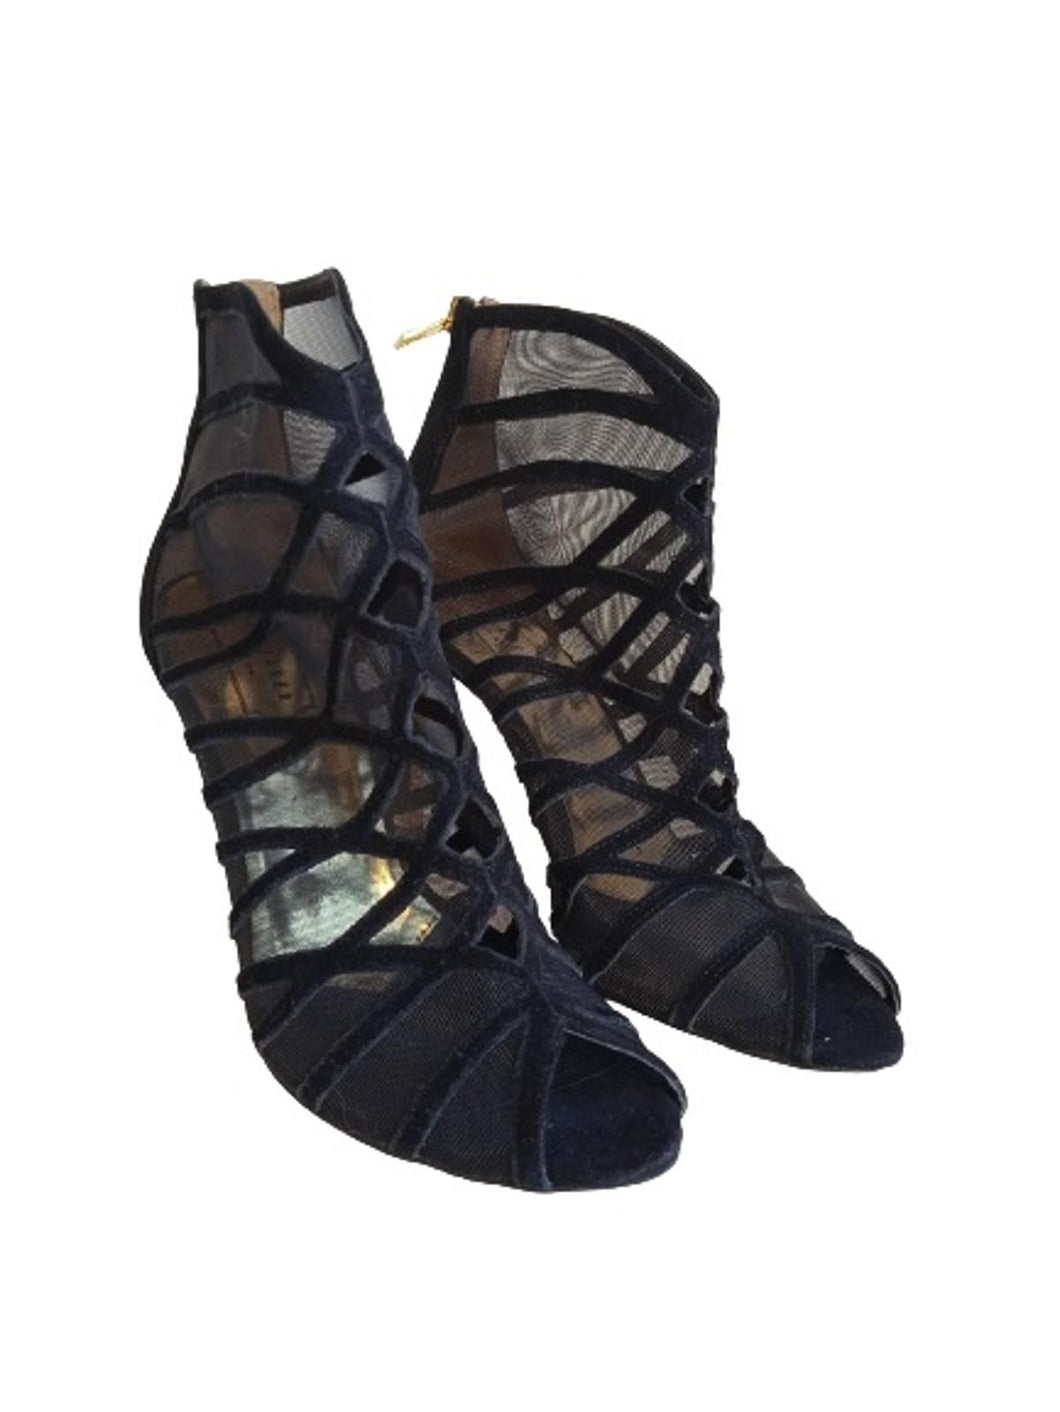 TED BAKER Ladies Black Suede Sheer Panel Elisea Ankle Boots Size EU39 UK6